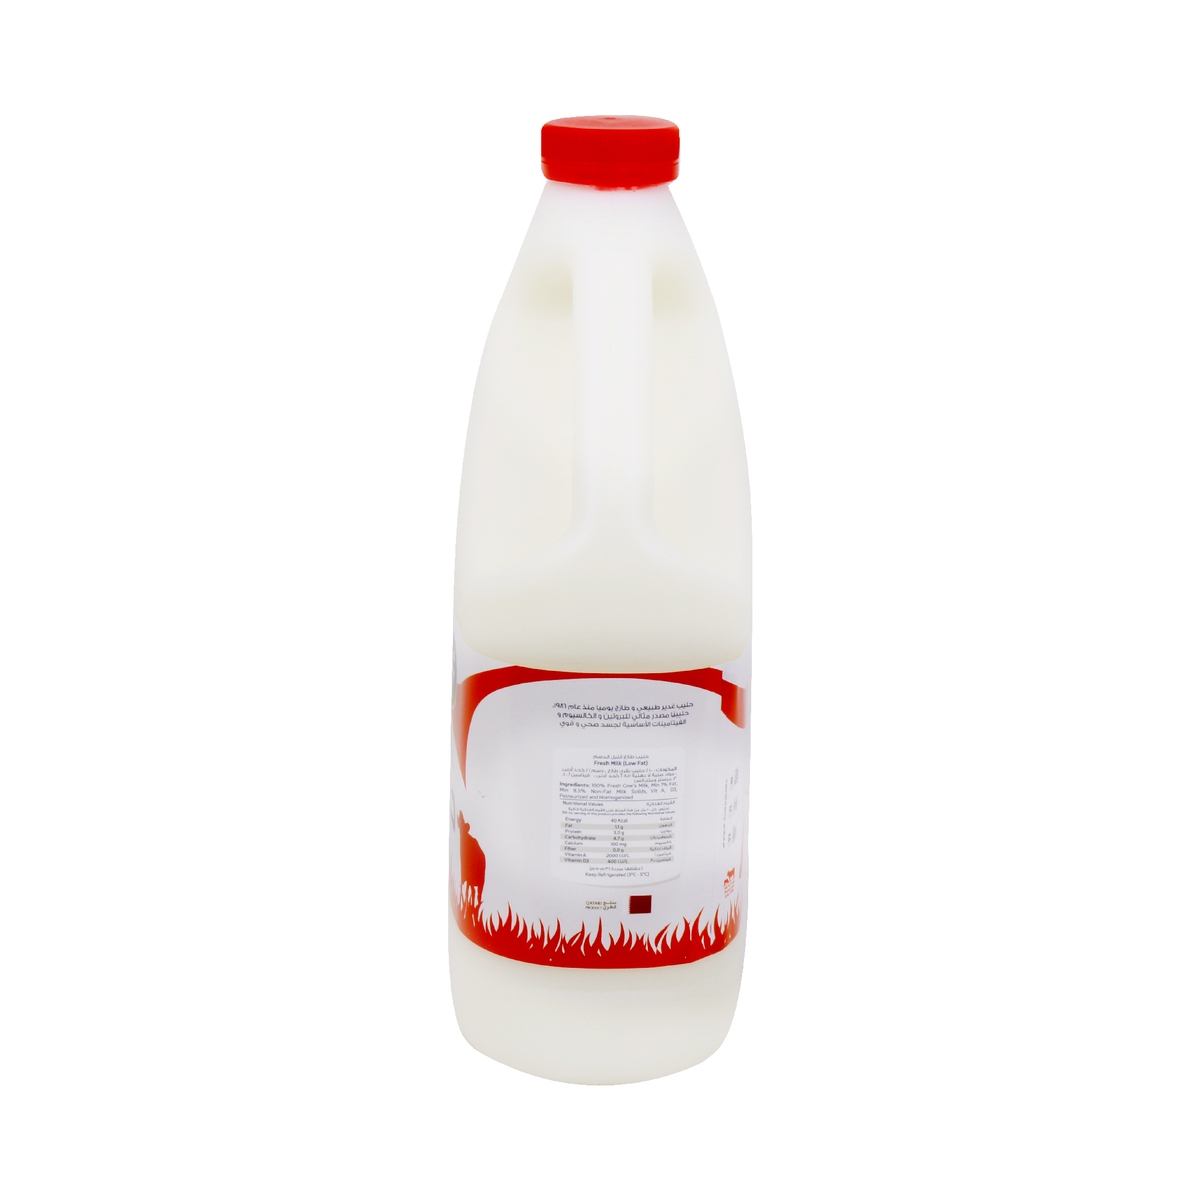 Ghadeer Fresh Milk Low Fat 1.75Litre